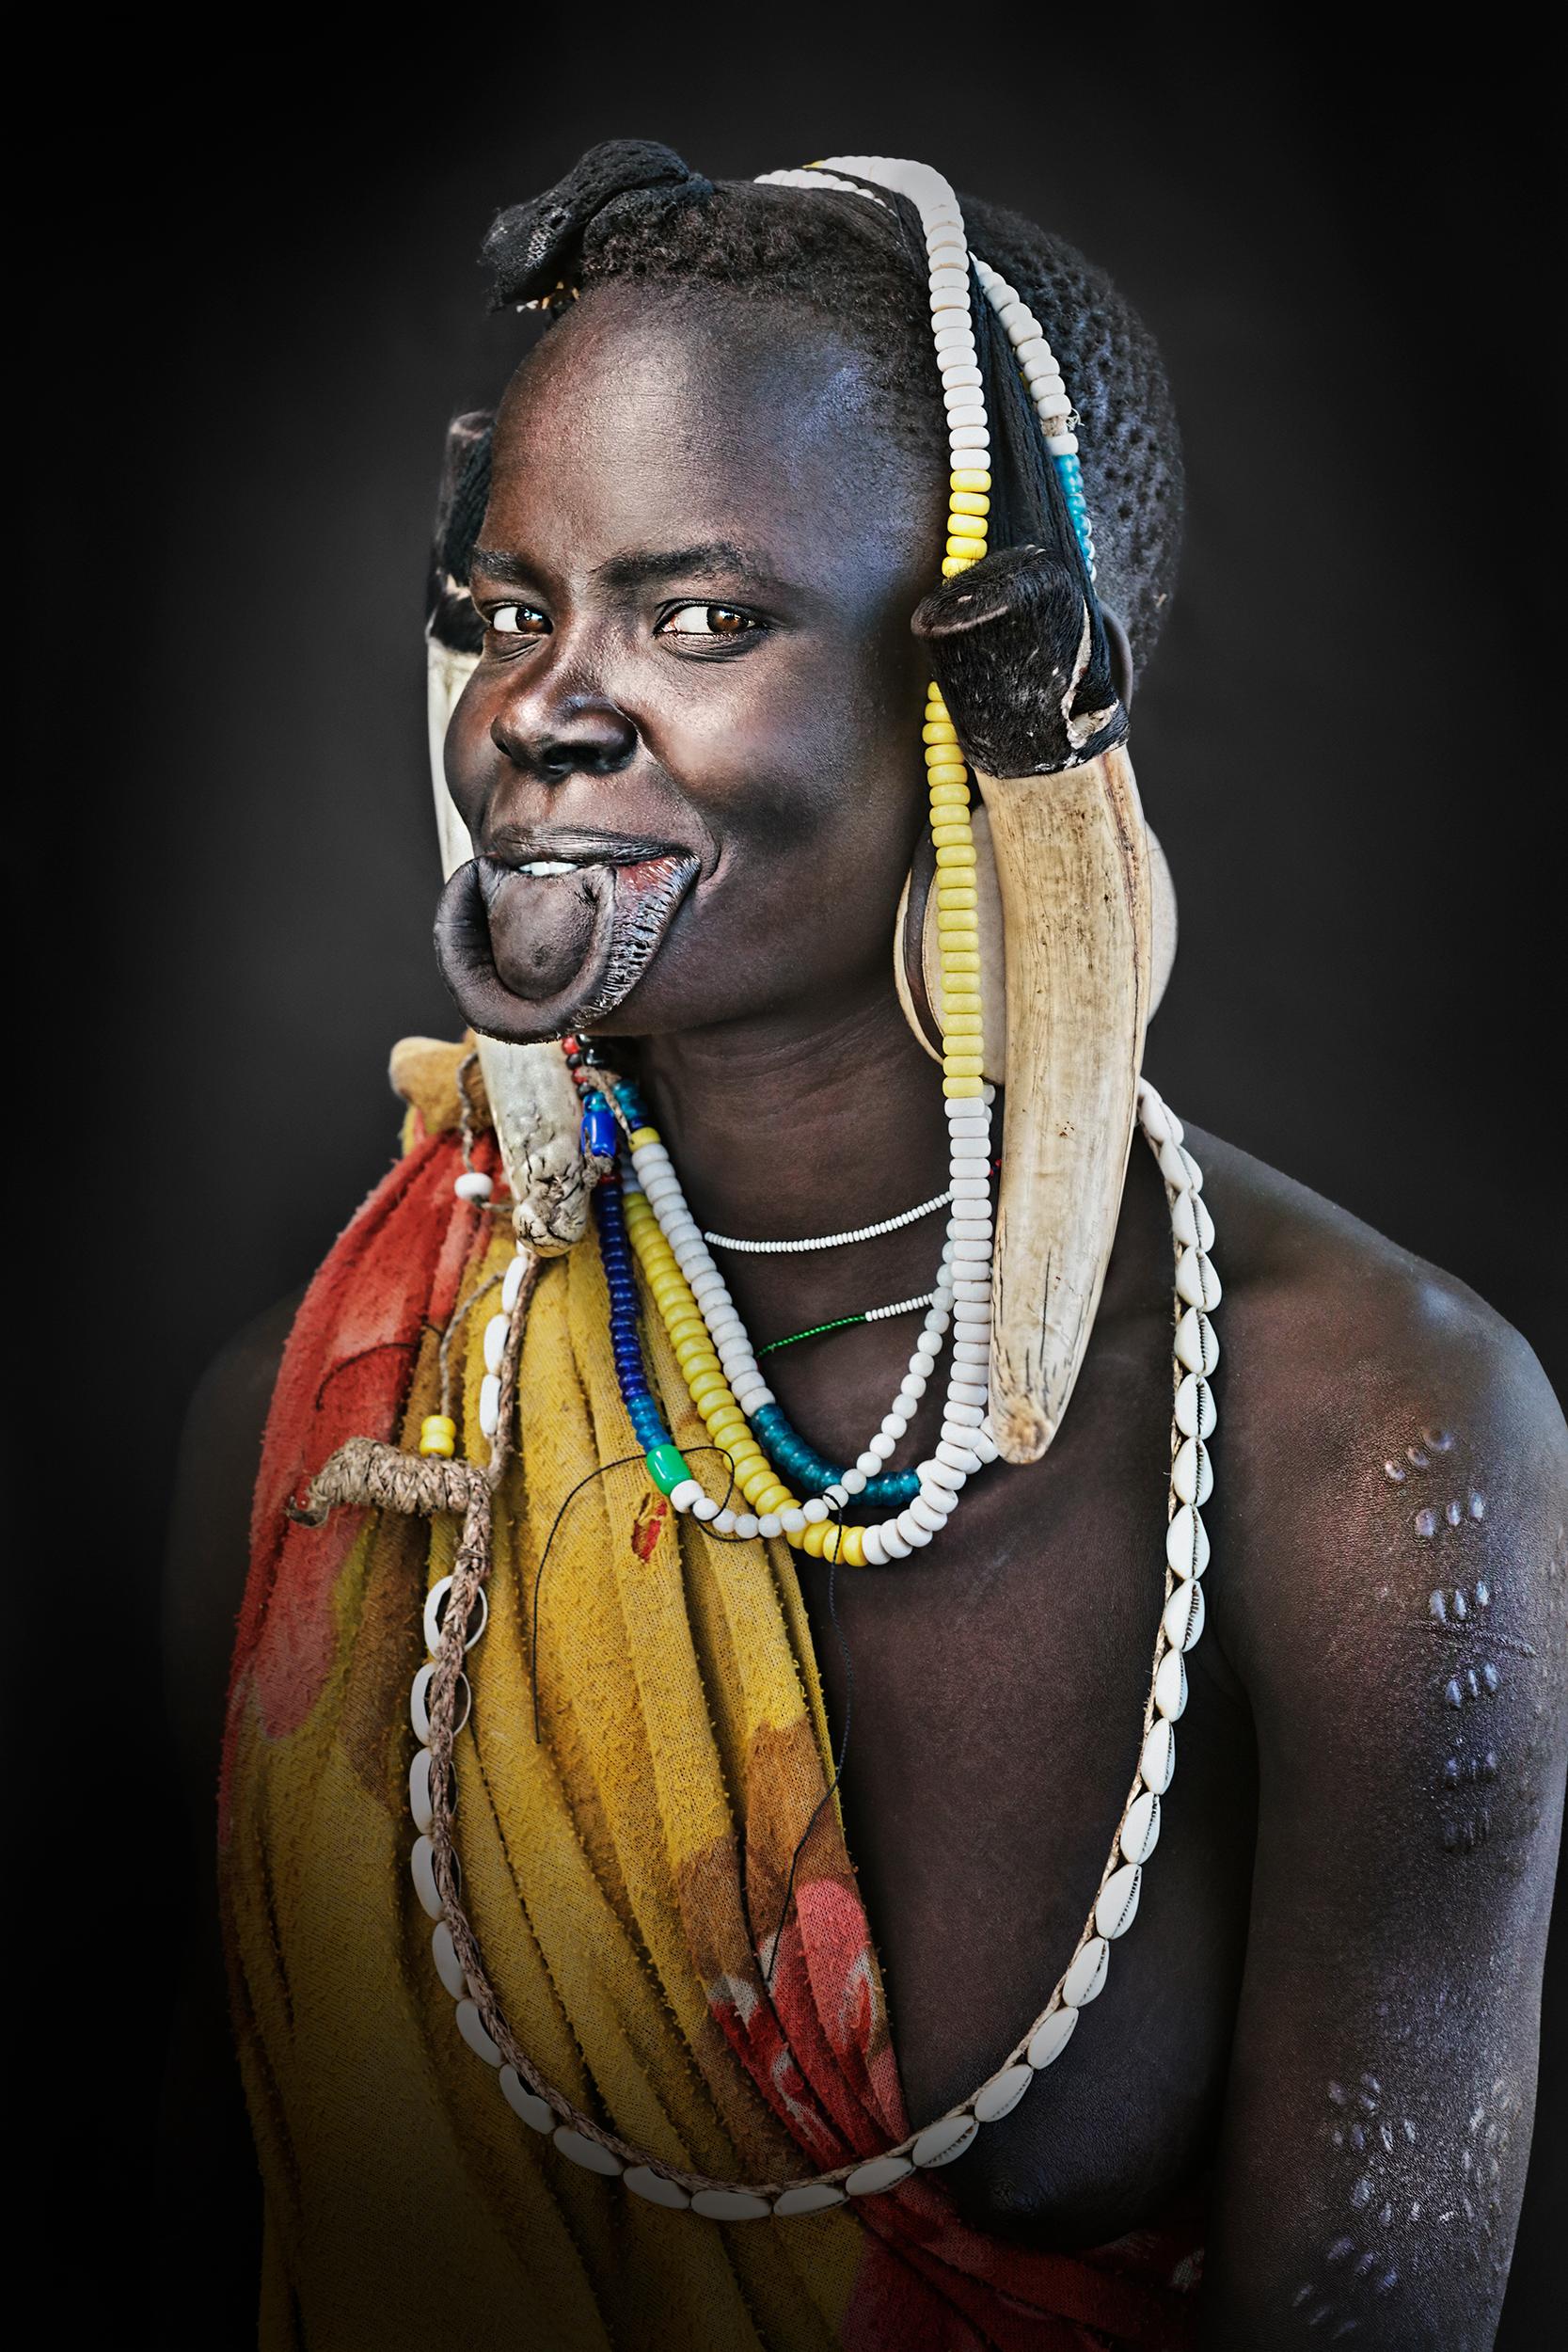 Olga Michi Color Photograph - The indigenous Madonna